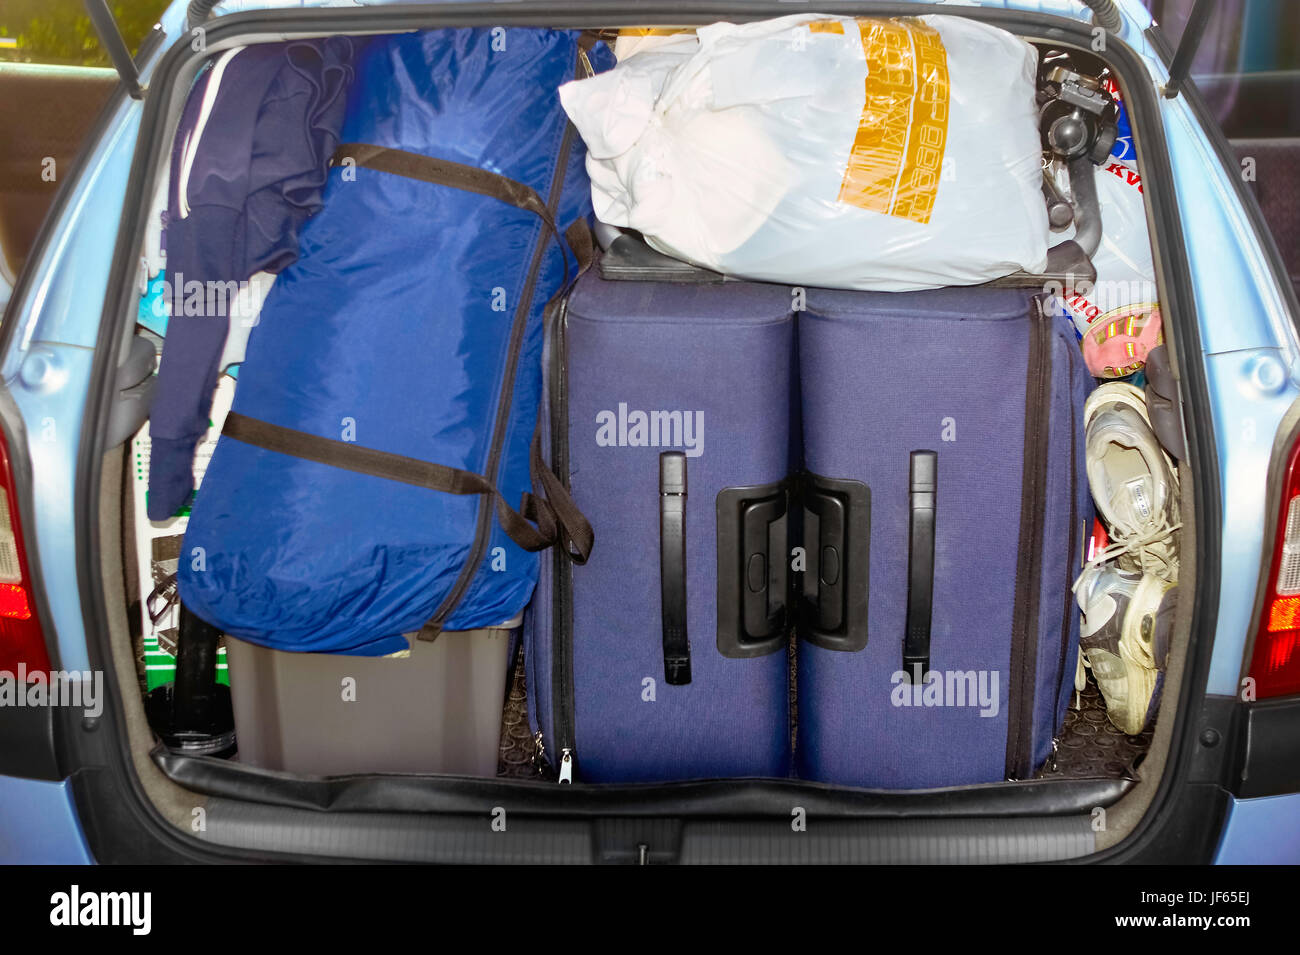 Luggage in car trunk Stock Photo